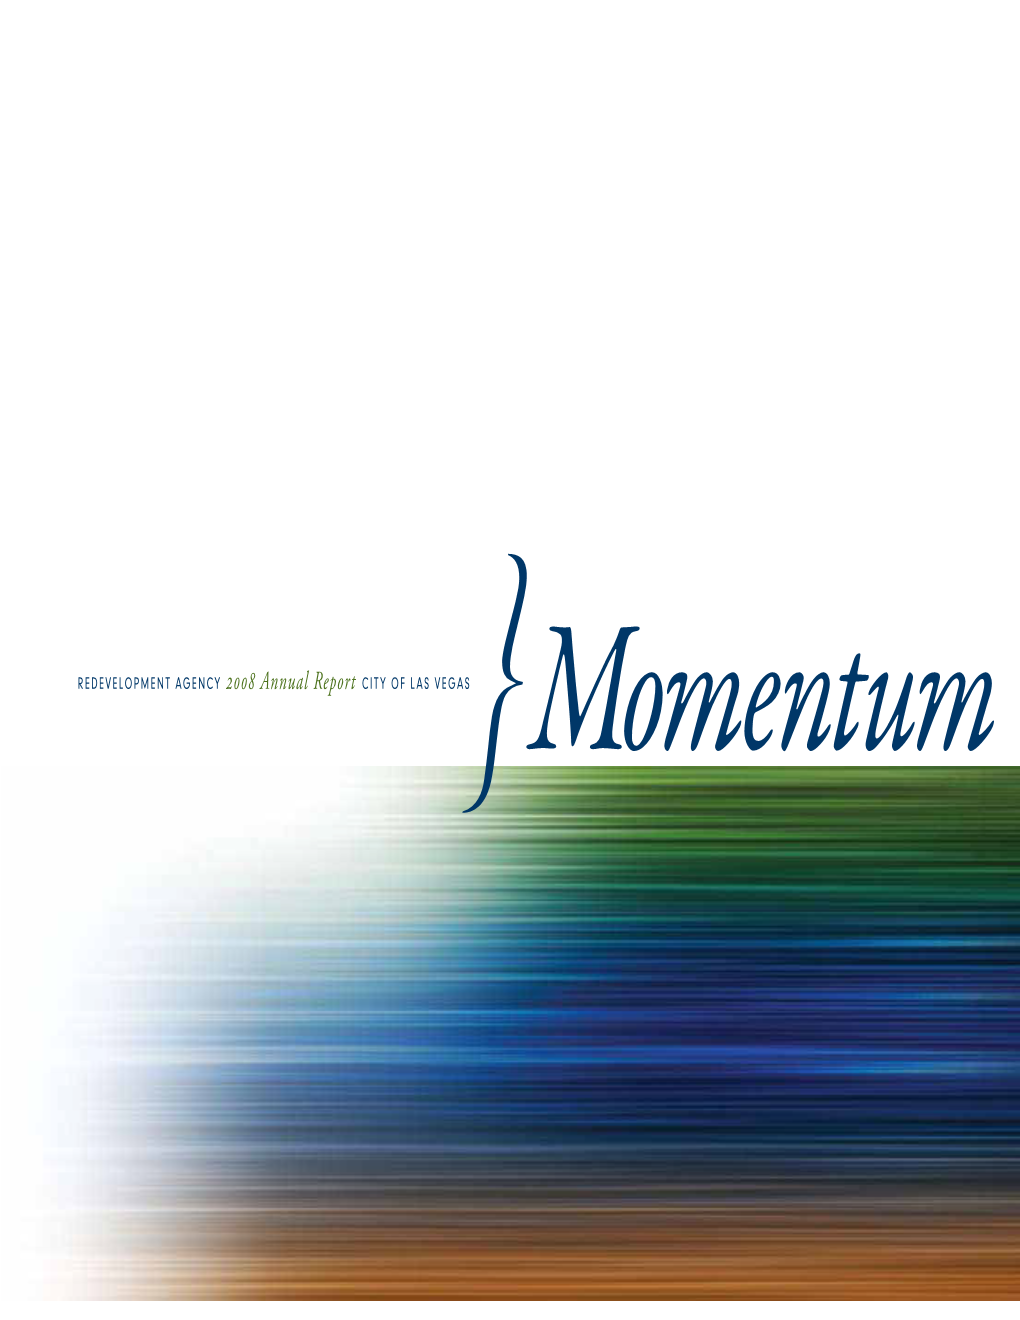 2008 Annual Report $*5:0'-"47&("4 Momentum